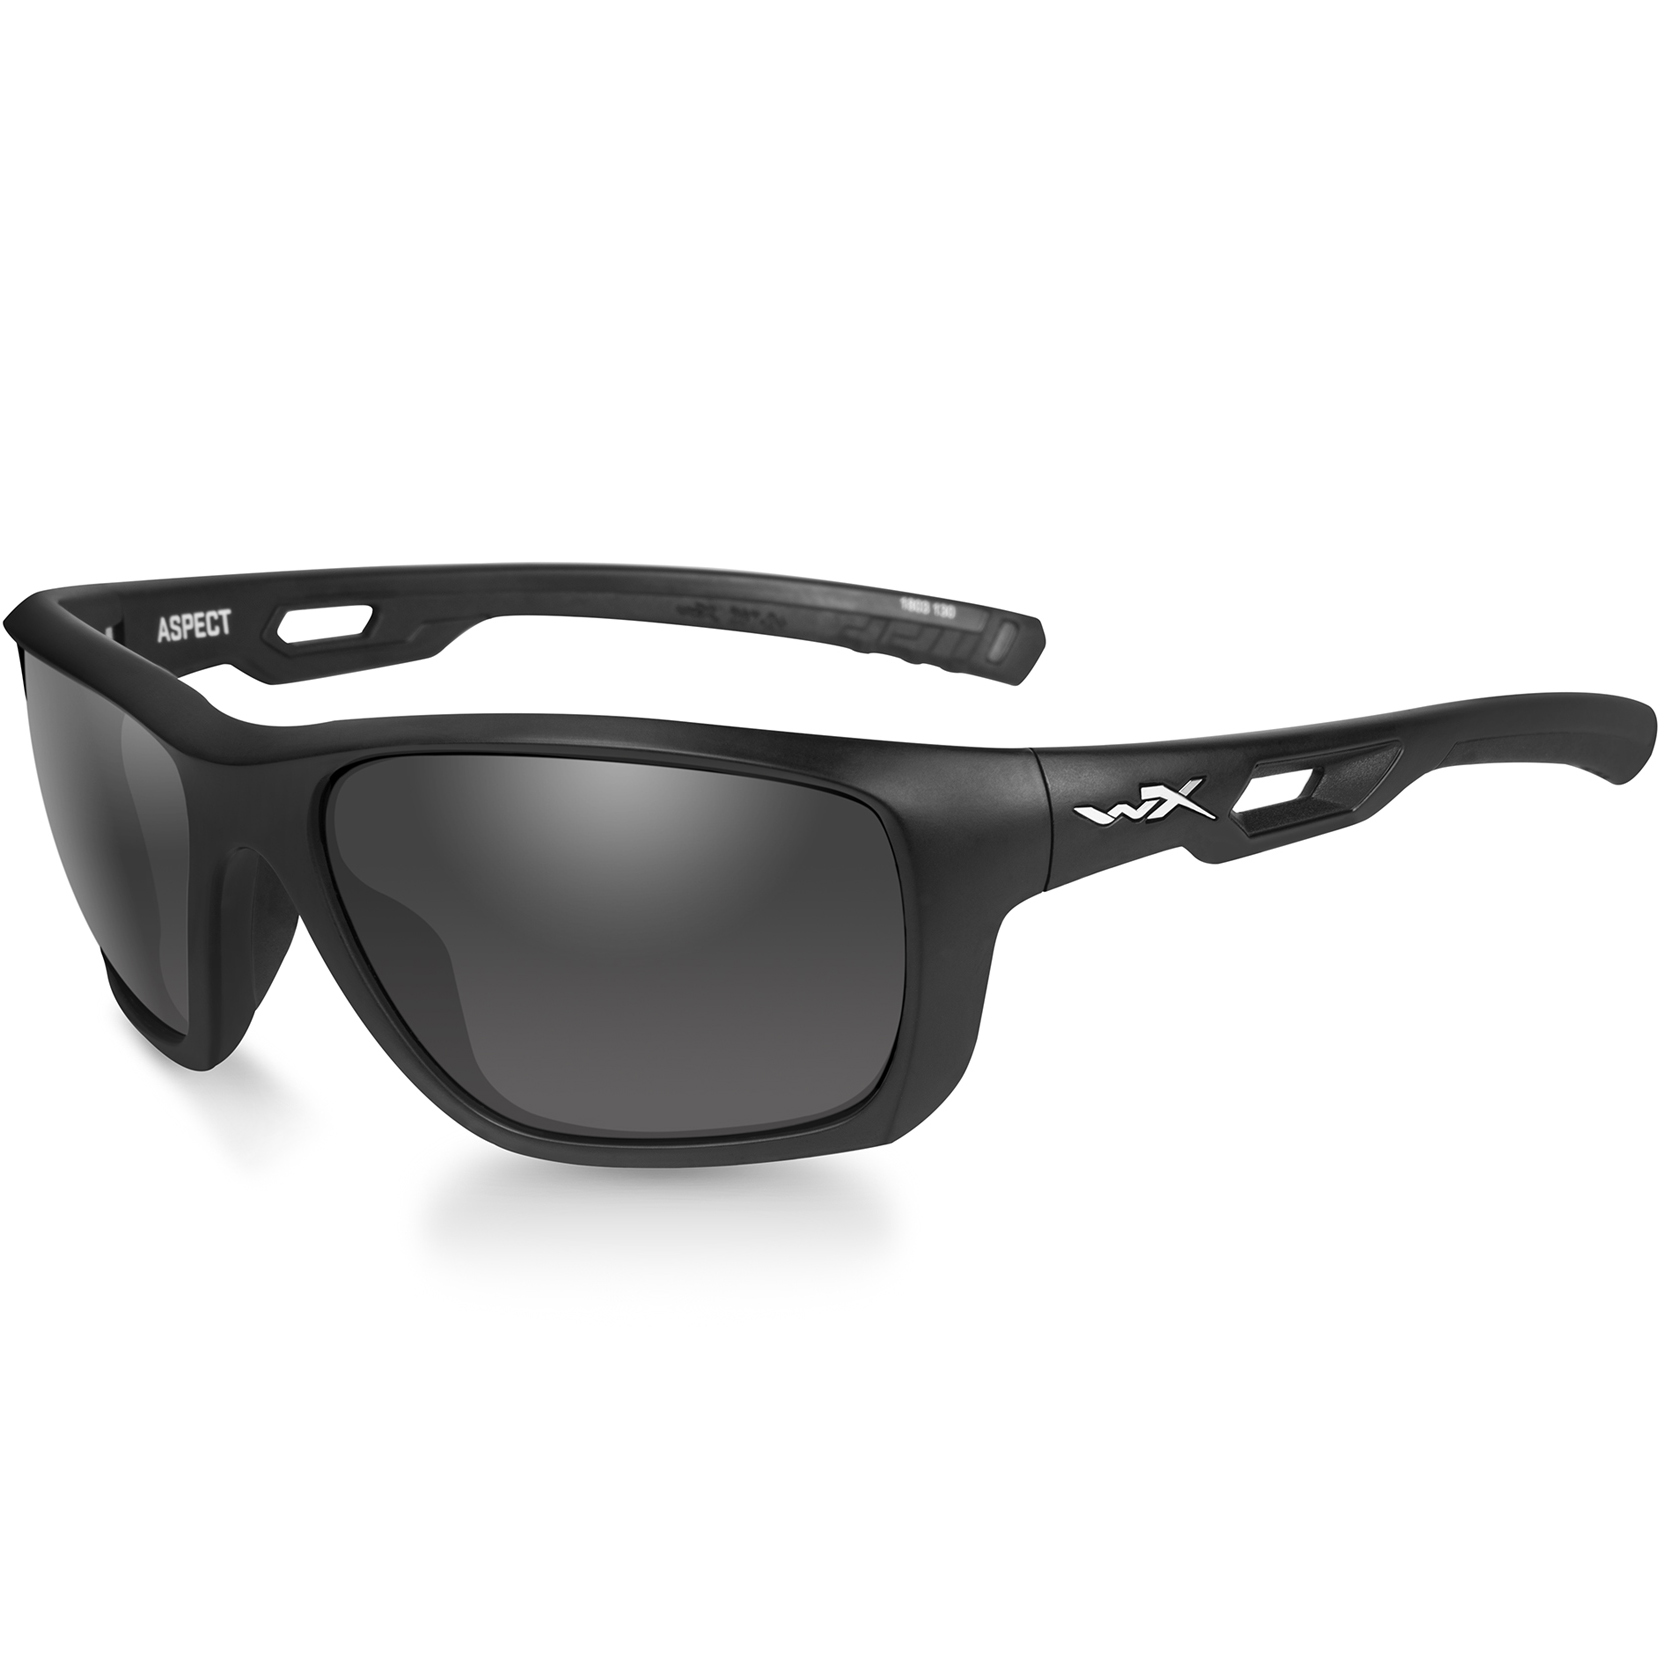 Wiley X Titan Grey Matte Black Grey Sunglasses Authentic New CCTTN01